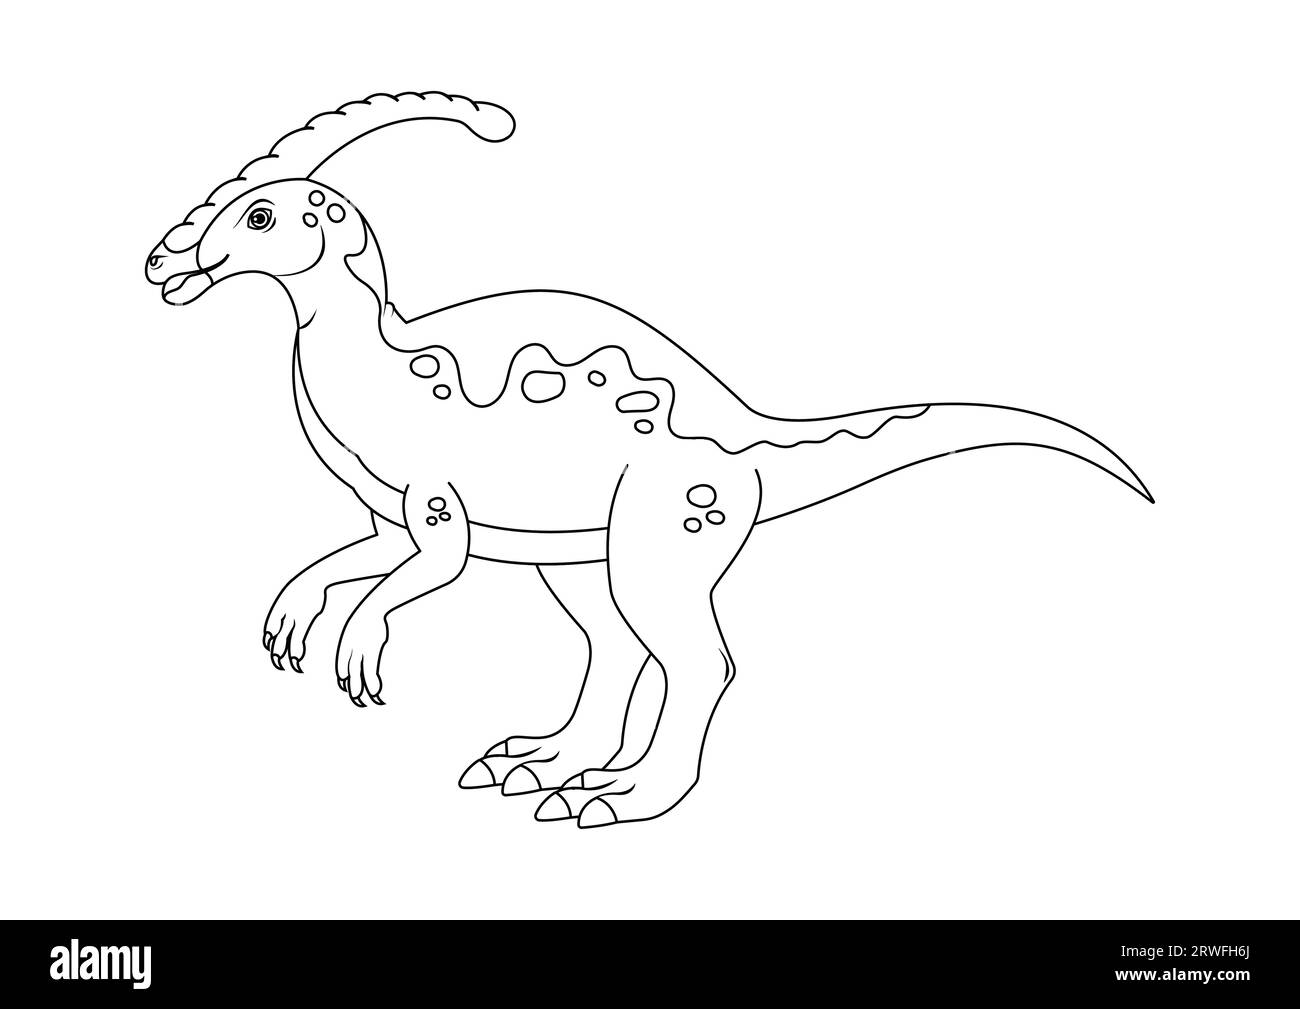 Black and White Parasaurolophus Dinosaur Cartoon Character Vector. Coloring Page of a Parasaurolophus Dinosaur Stock Vector